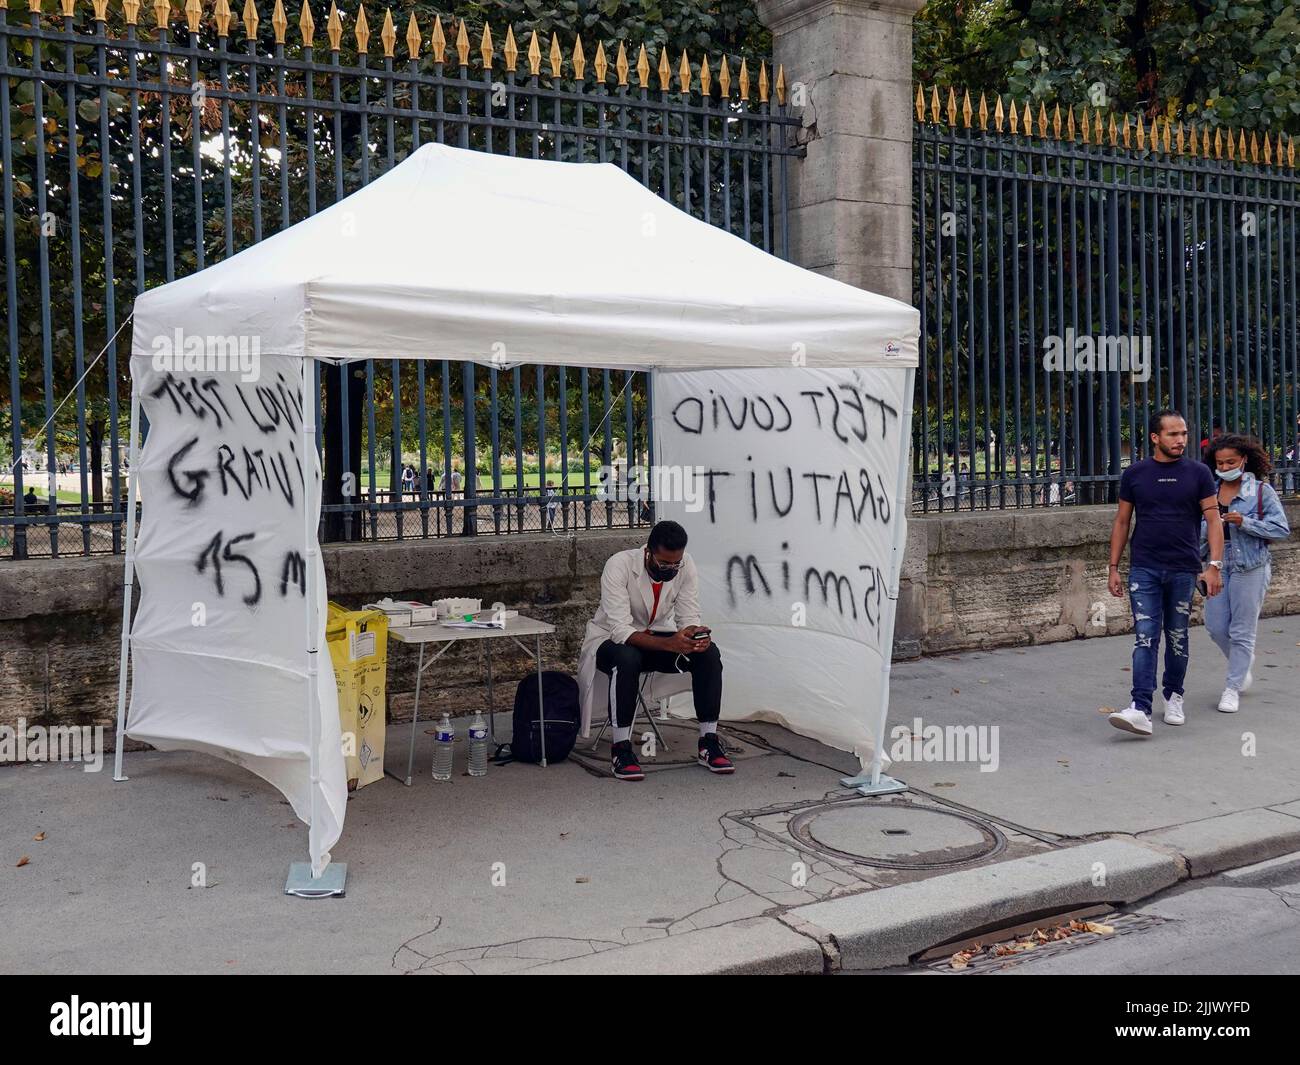 France, Paris, 10 September, 2021. Covid tests stalls on the streets of Paris   Photo © Fabio Mazzarella/Sintesi/Alamy Stock Photo Stock Photo